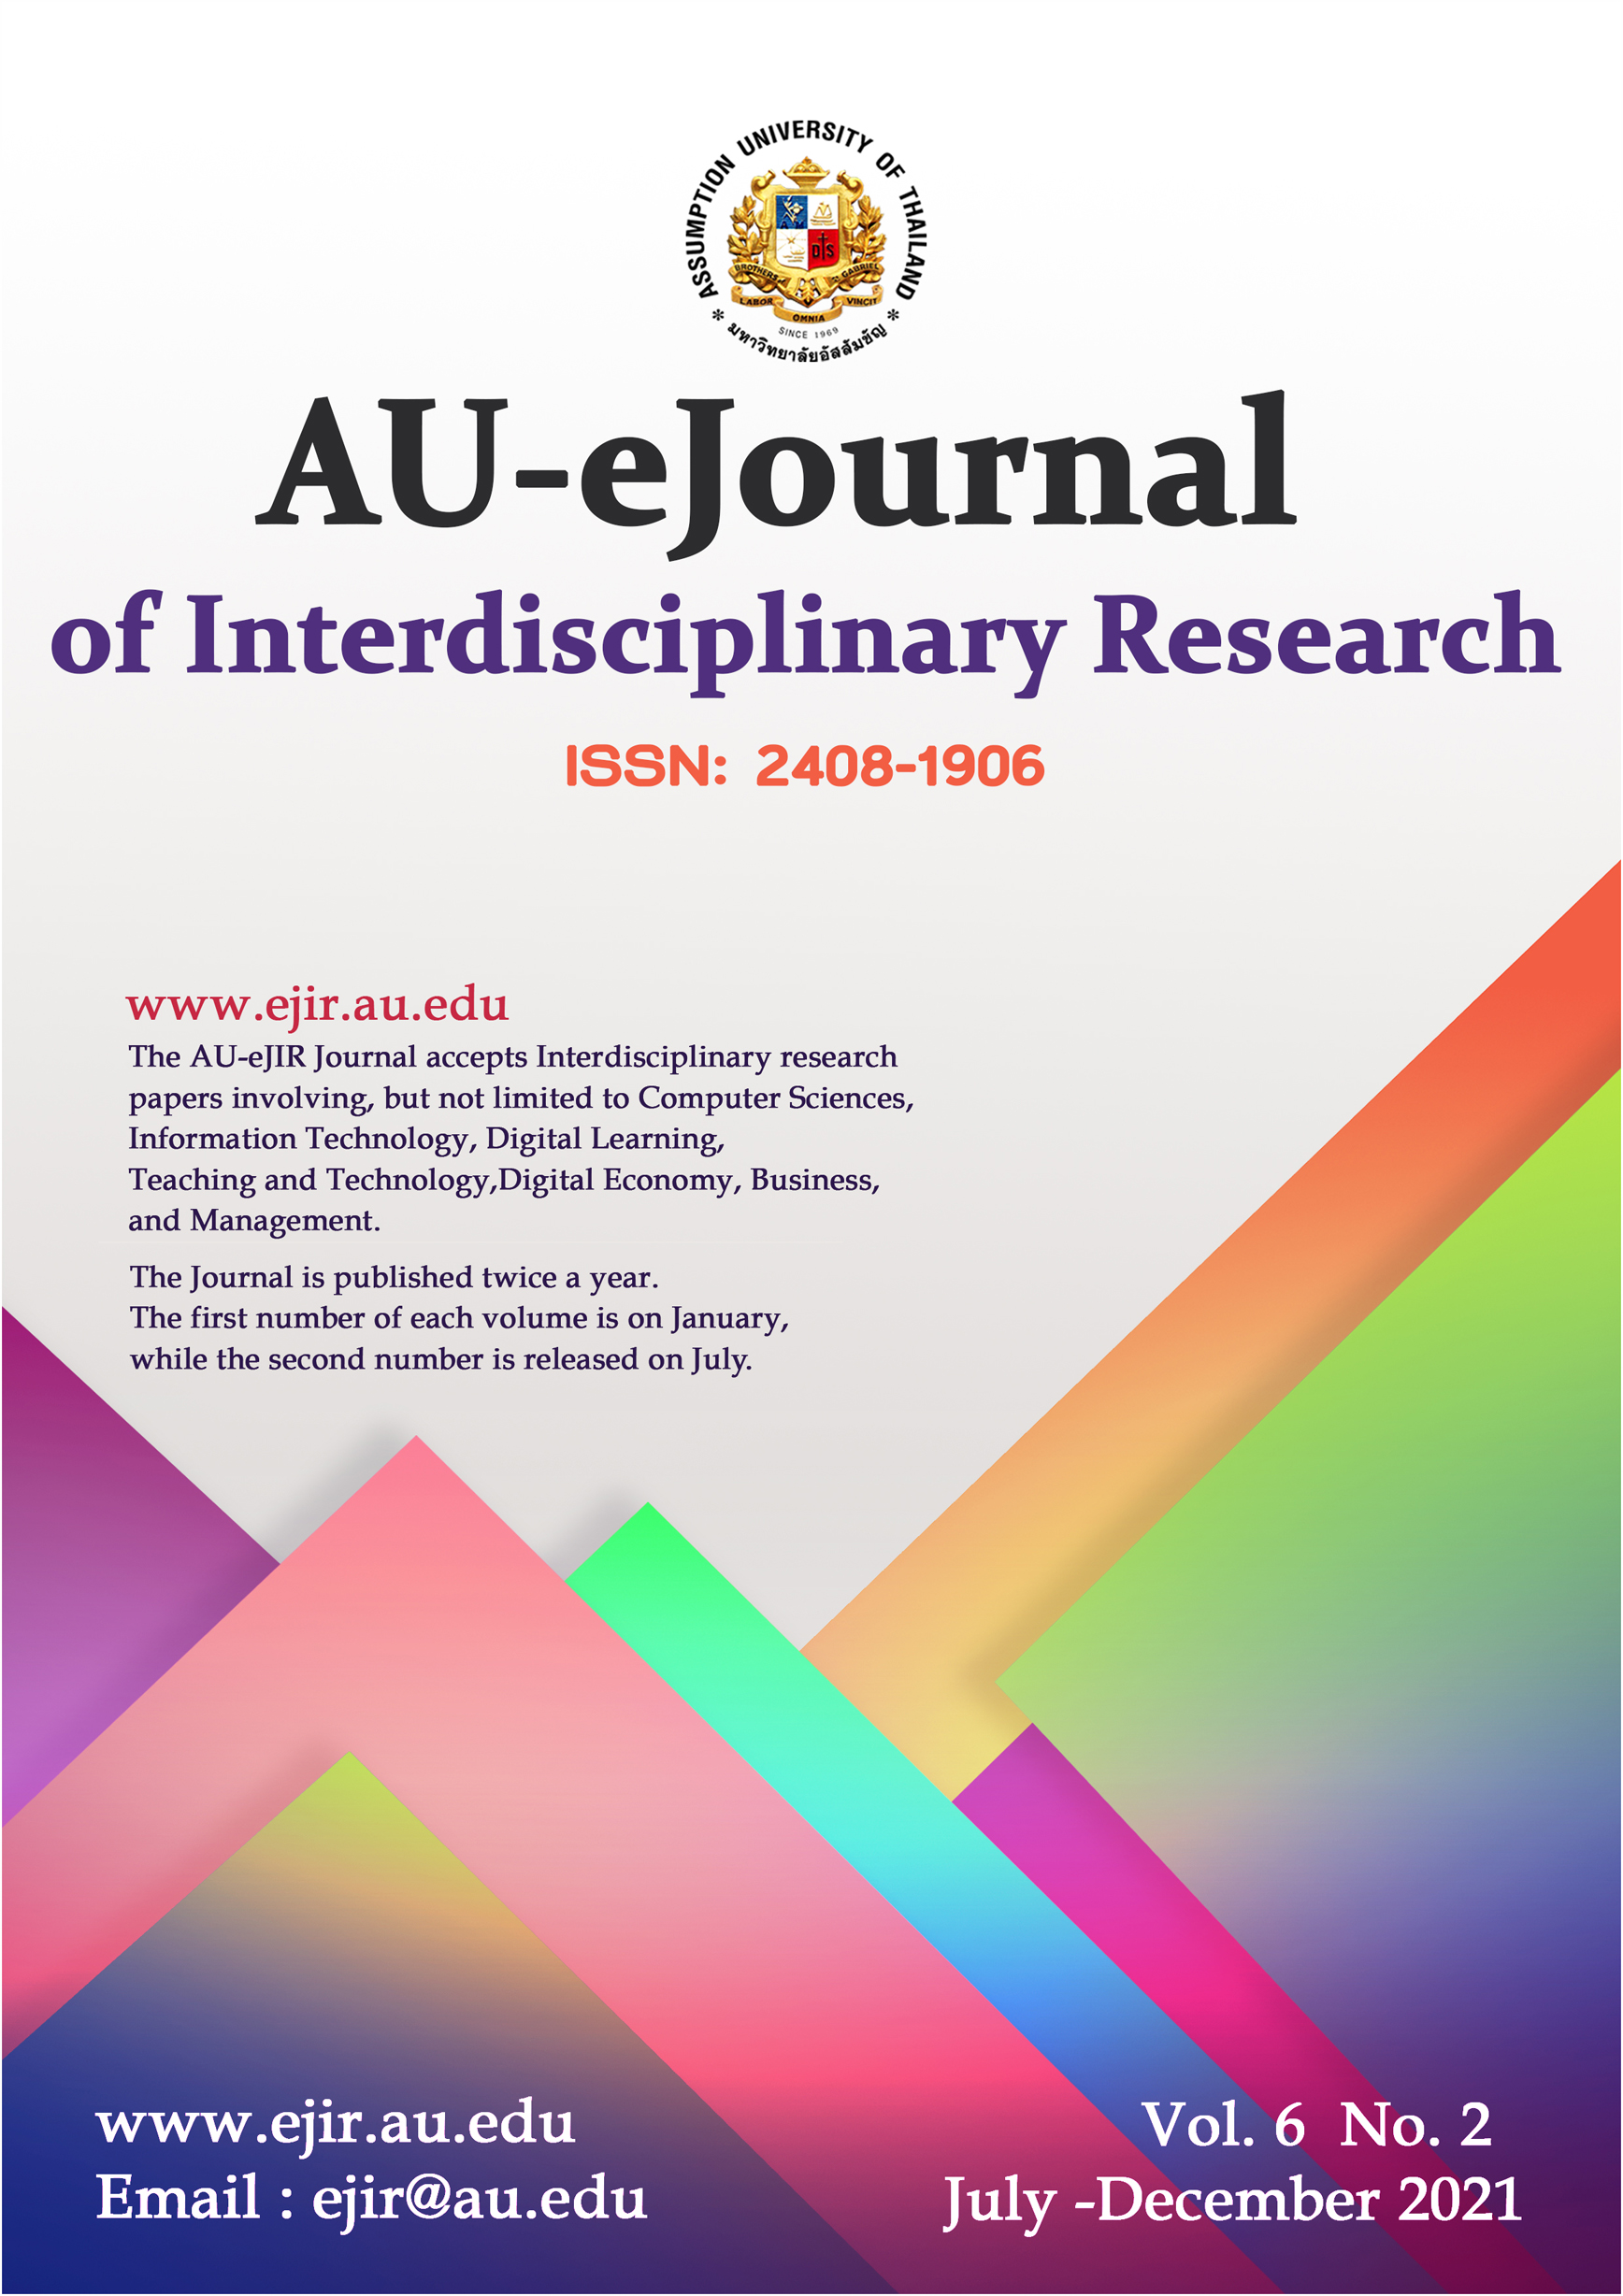 					View Vol. 6 No. 2 (2021): AU-EJOURNAL OF INTERDISCIPLINARY RESEARCH (AU-EJIR 6.2)
				